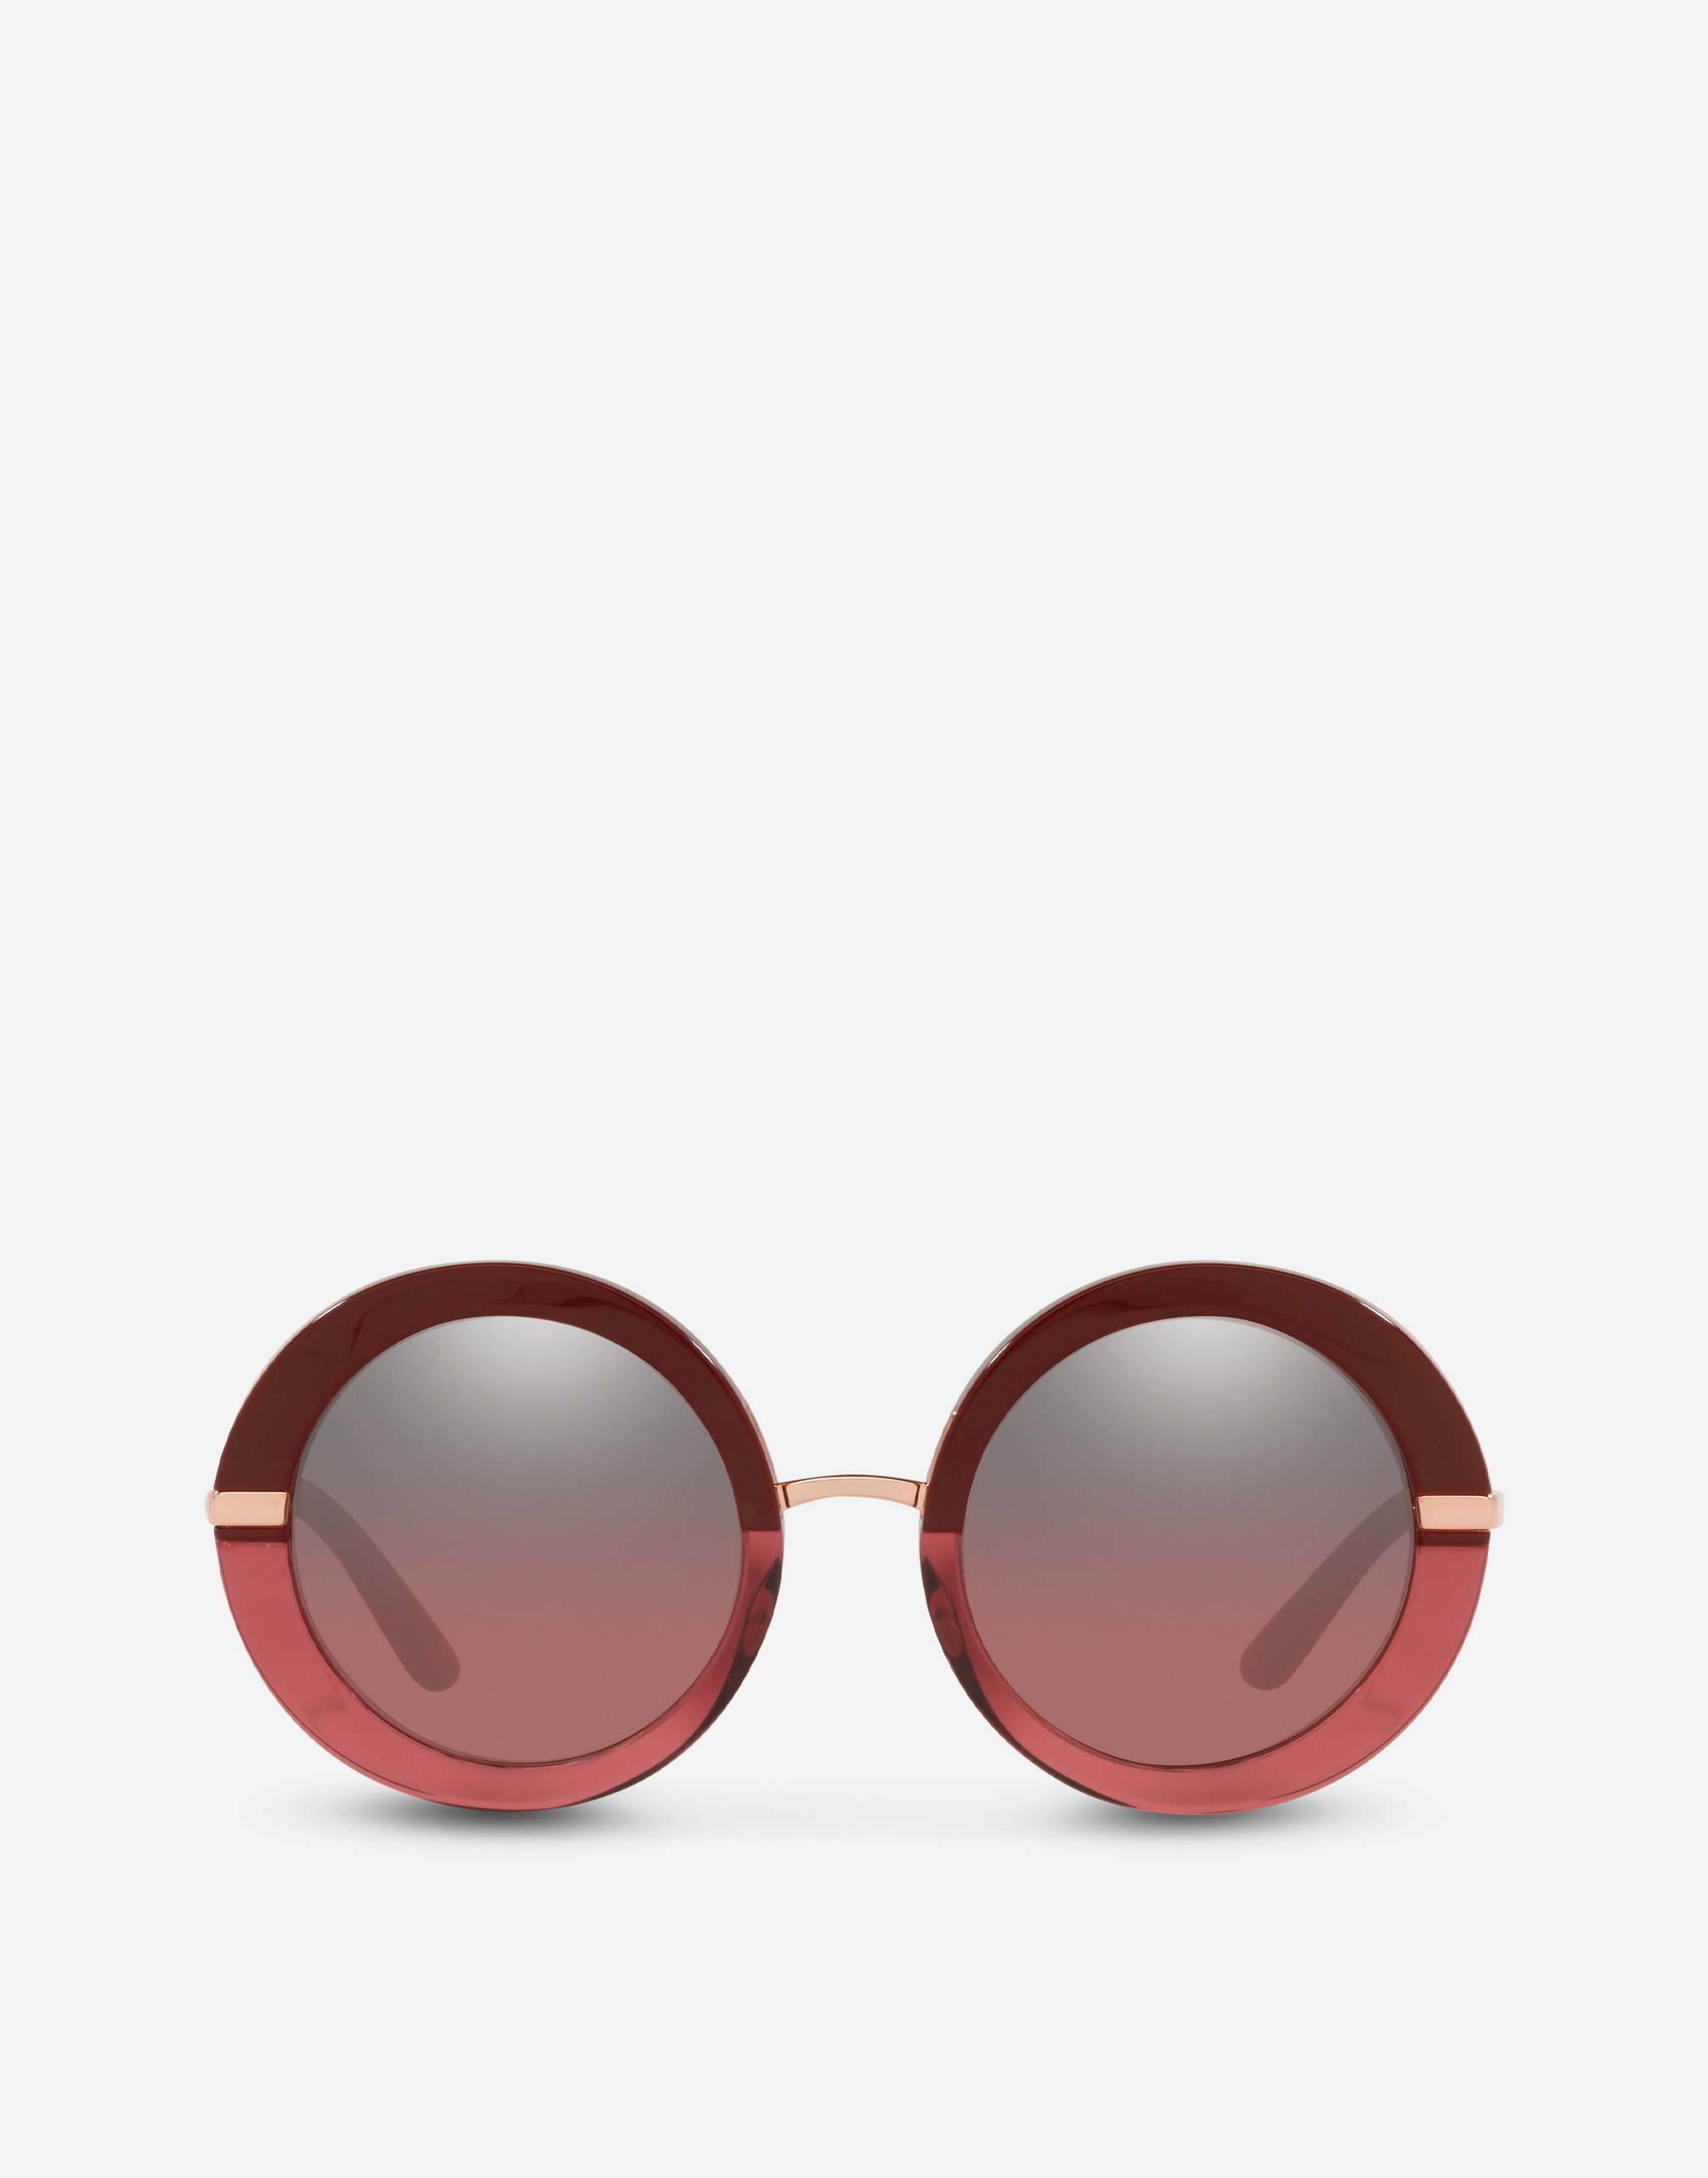 Half print sunglasses in Burgundy